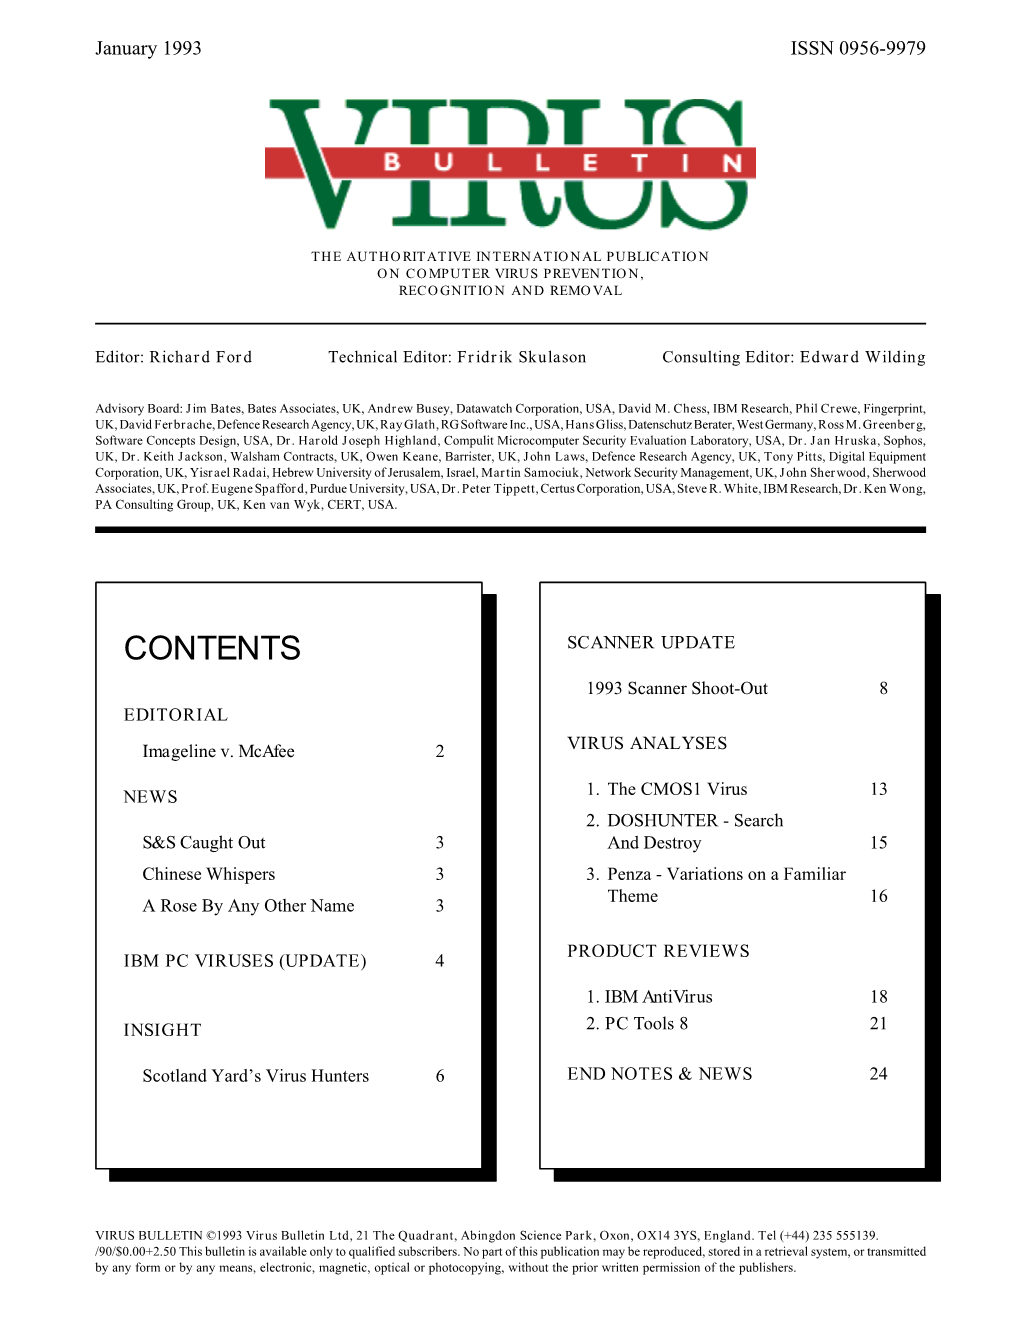 Virus Bulletin, January 1993